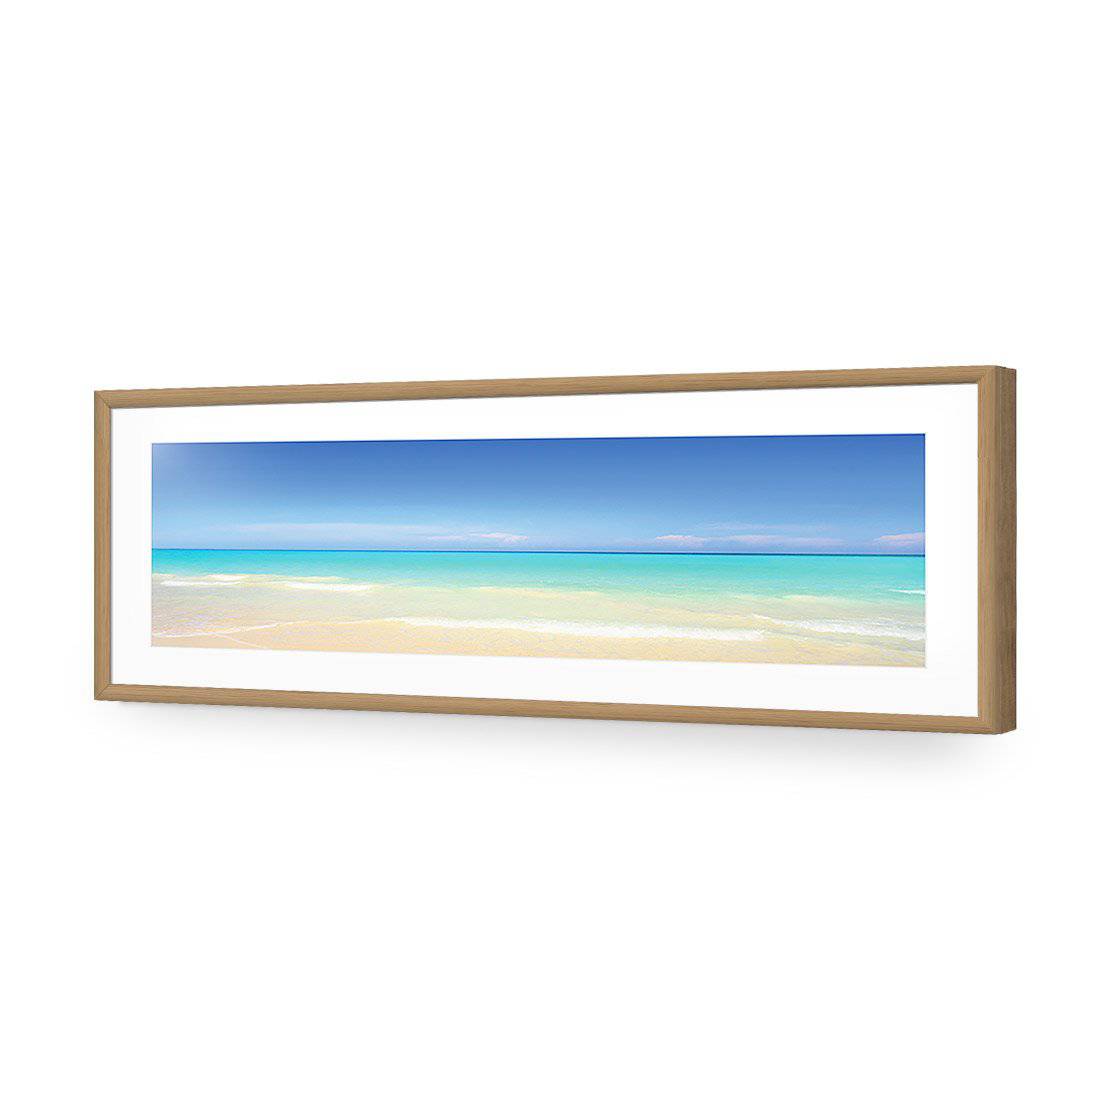 Paradise Beach, Long-Acrylic-Wall Art Design-With Border-Acrylic - Oak Frame-60x20cm-Wall Art Designs